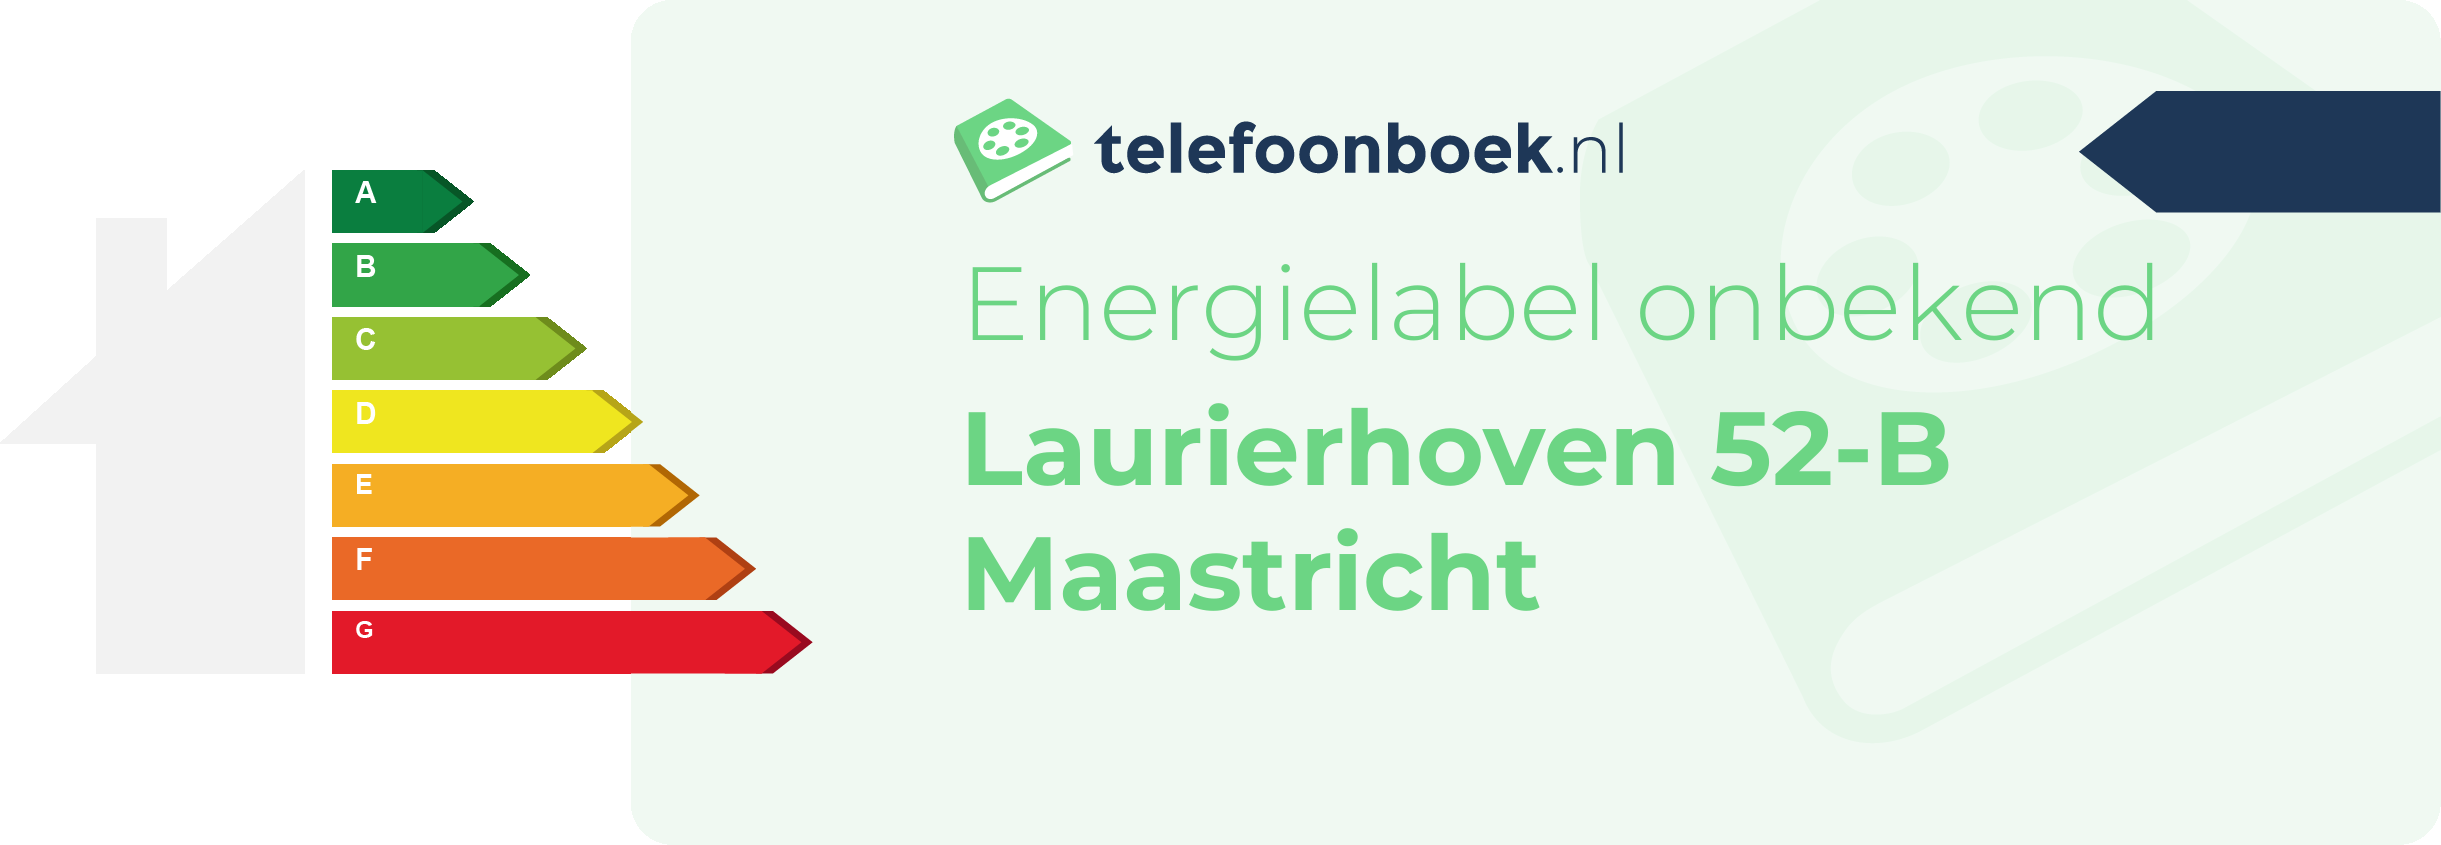 Energielabel Laurierhoven 52-B Maastricht